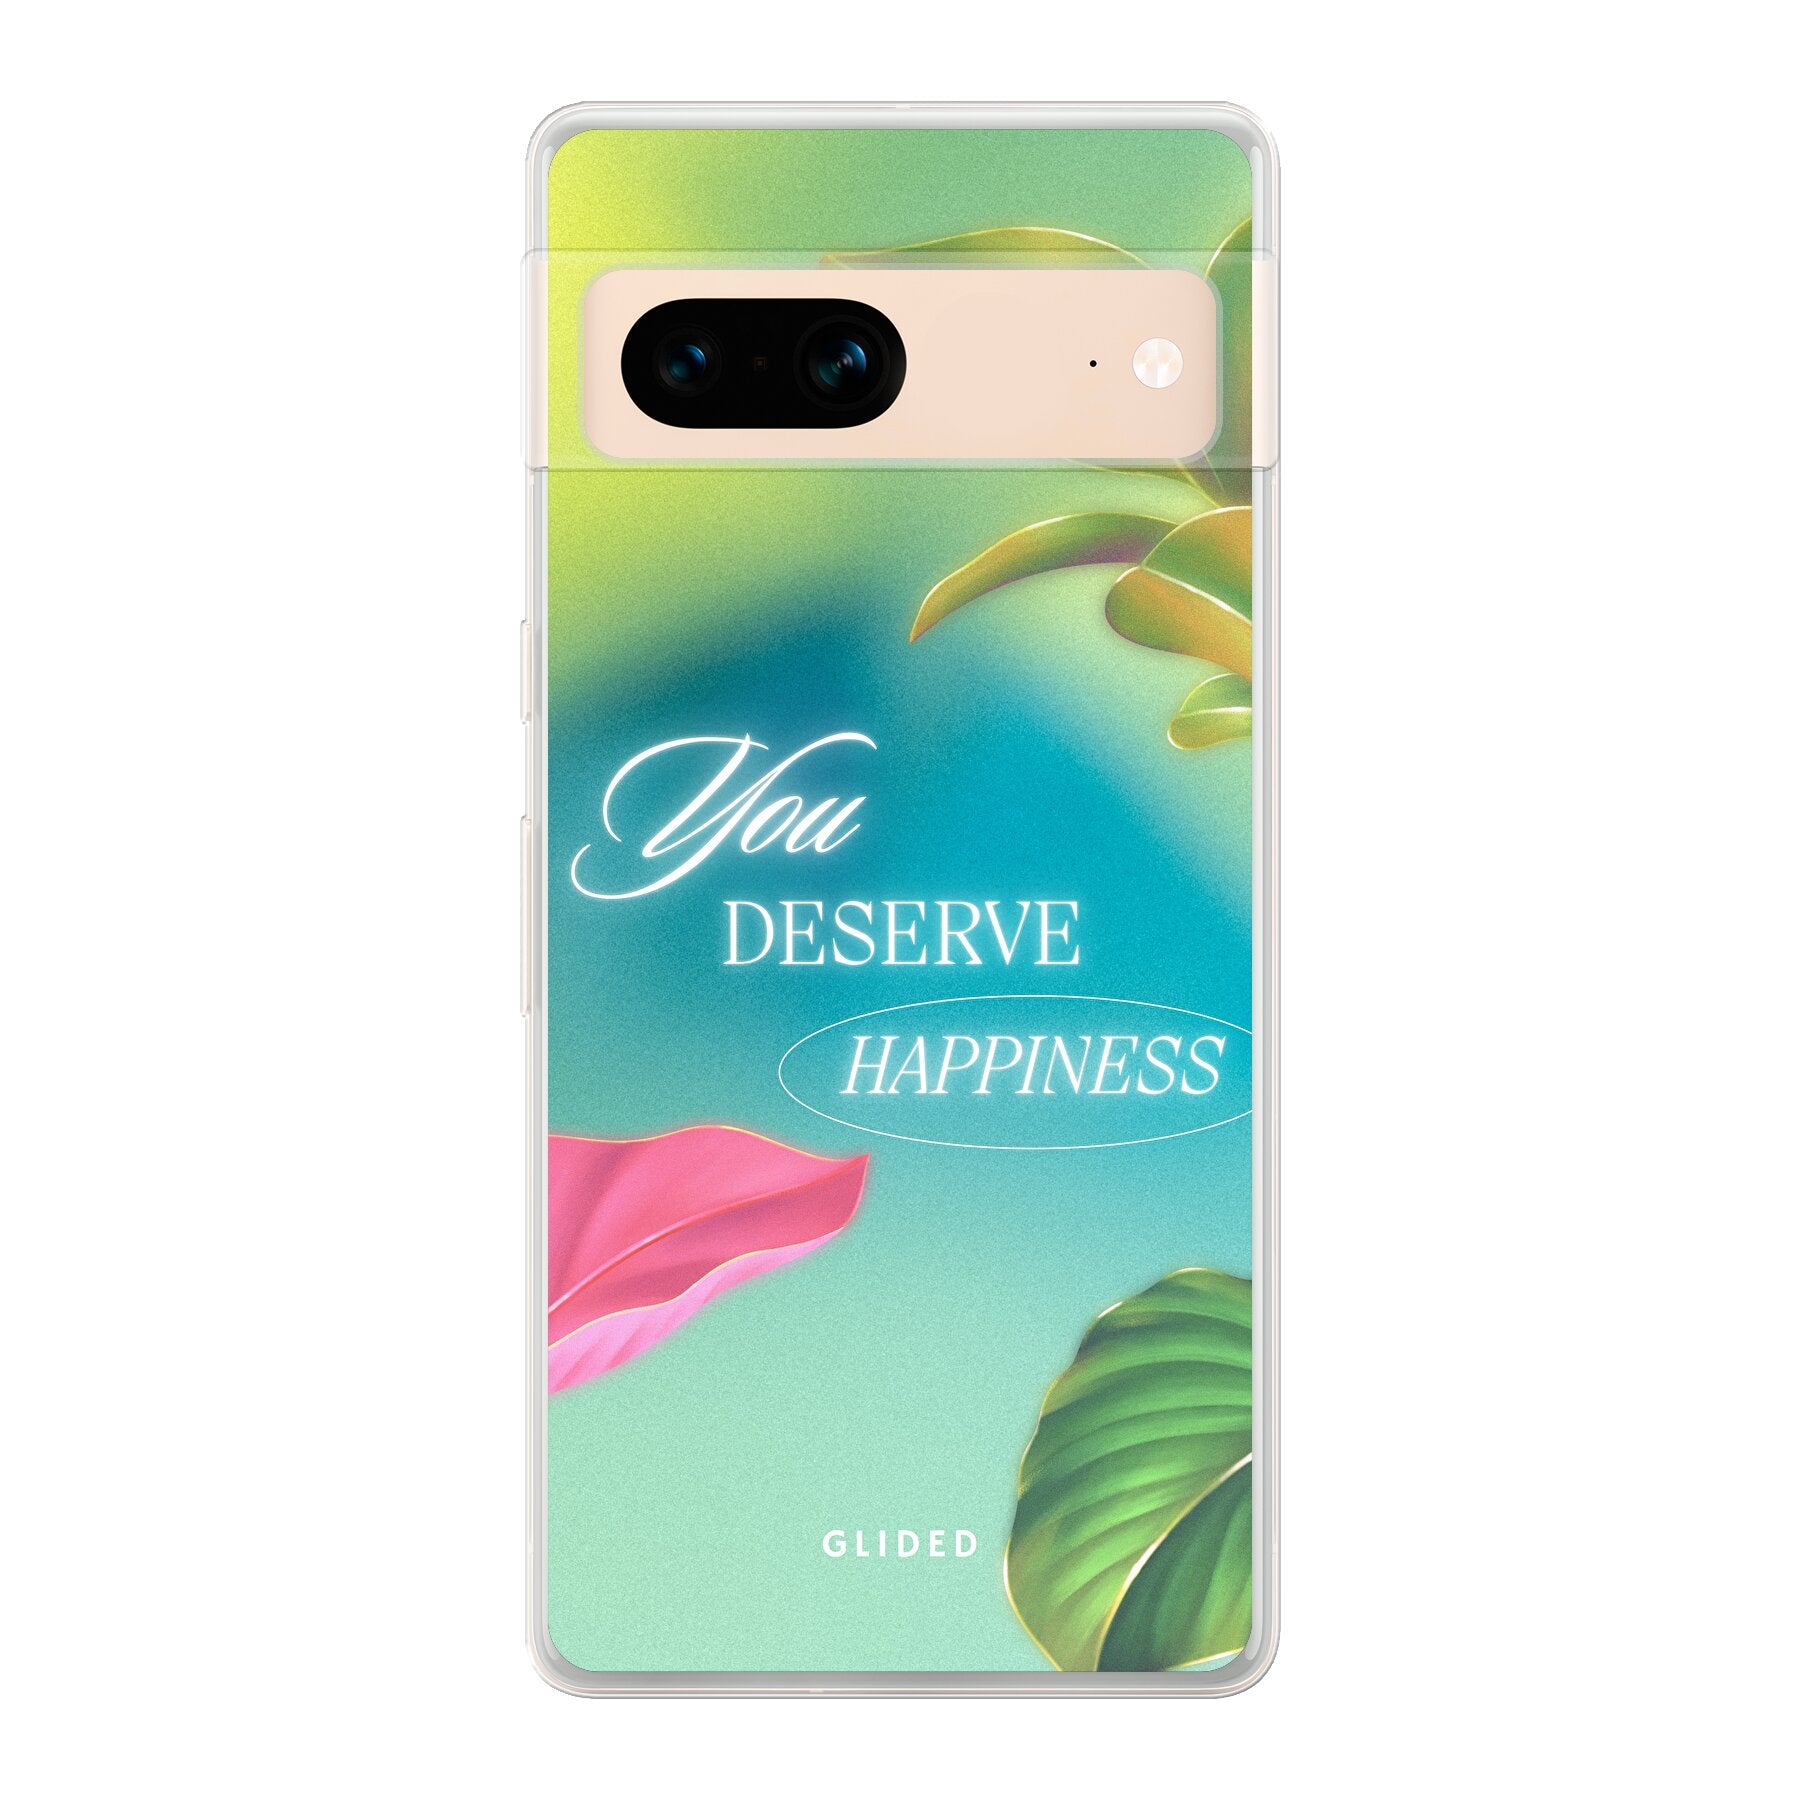 Happiness - Google Pixel 7 - Soft case